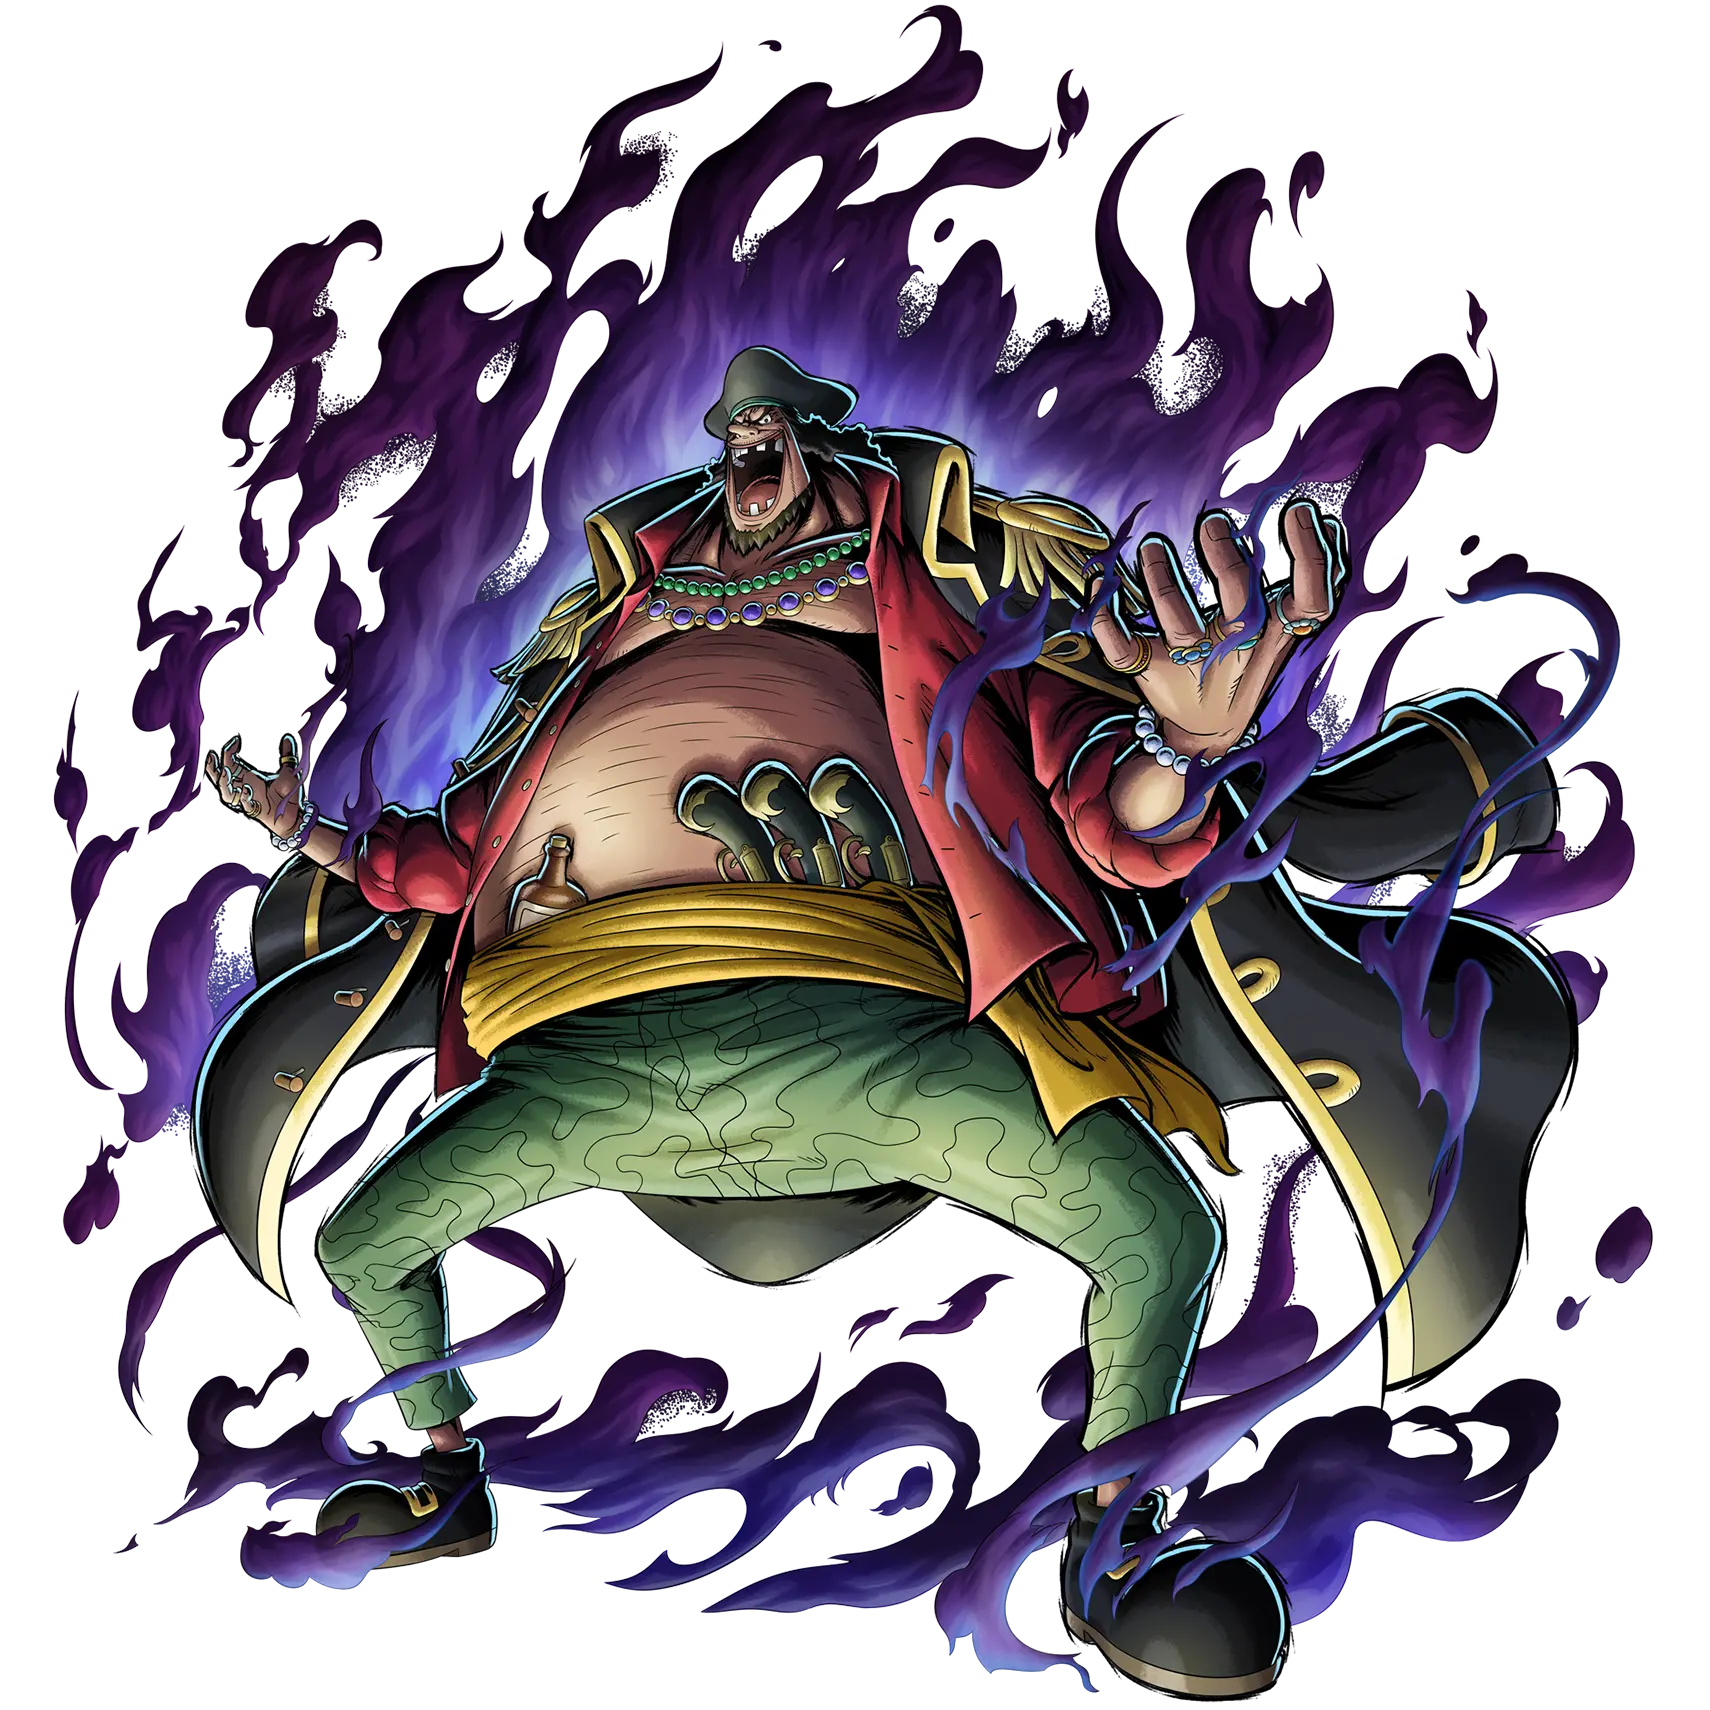 One Piece Bounty Rush Official Clan : r/Piratefolk